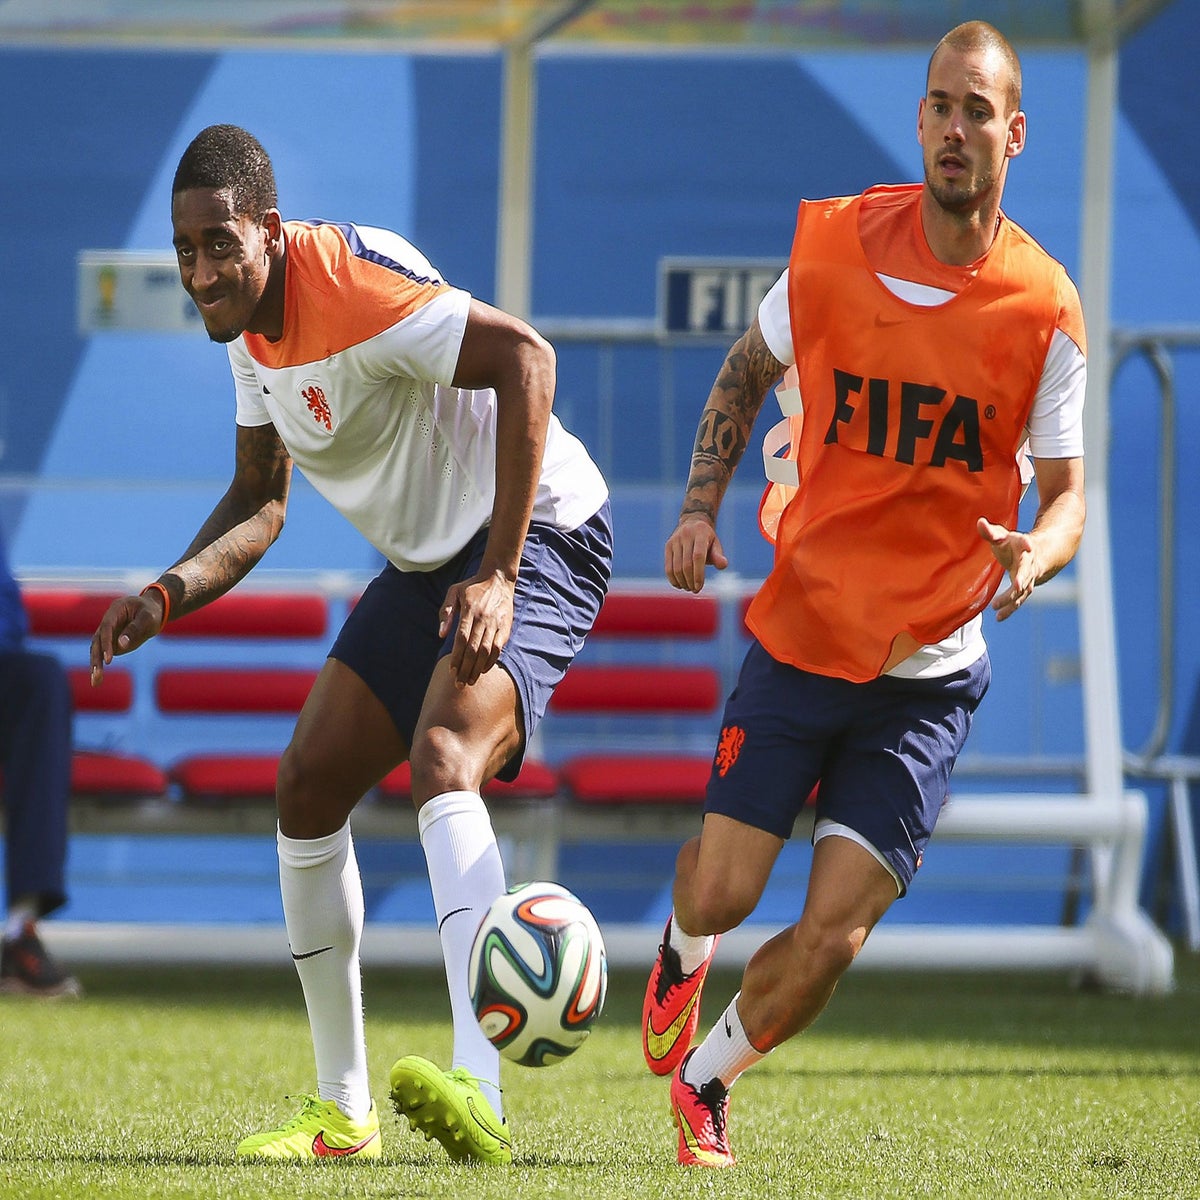 Salvador de Bahia, Brasil. 13th June, 2014. Wesley Sneijder (NED